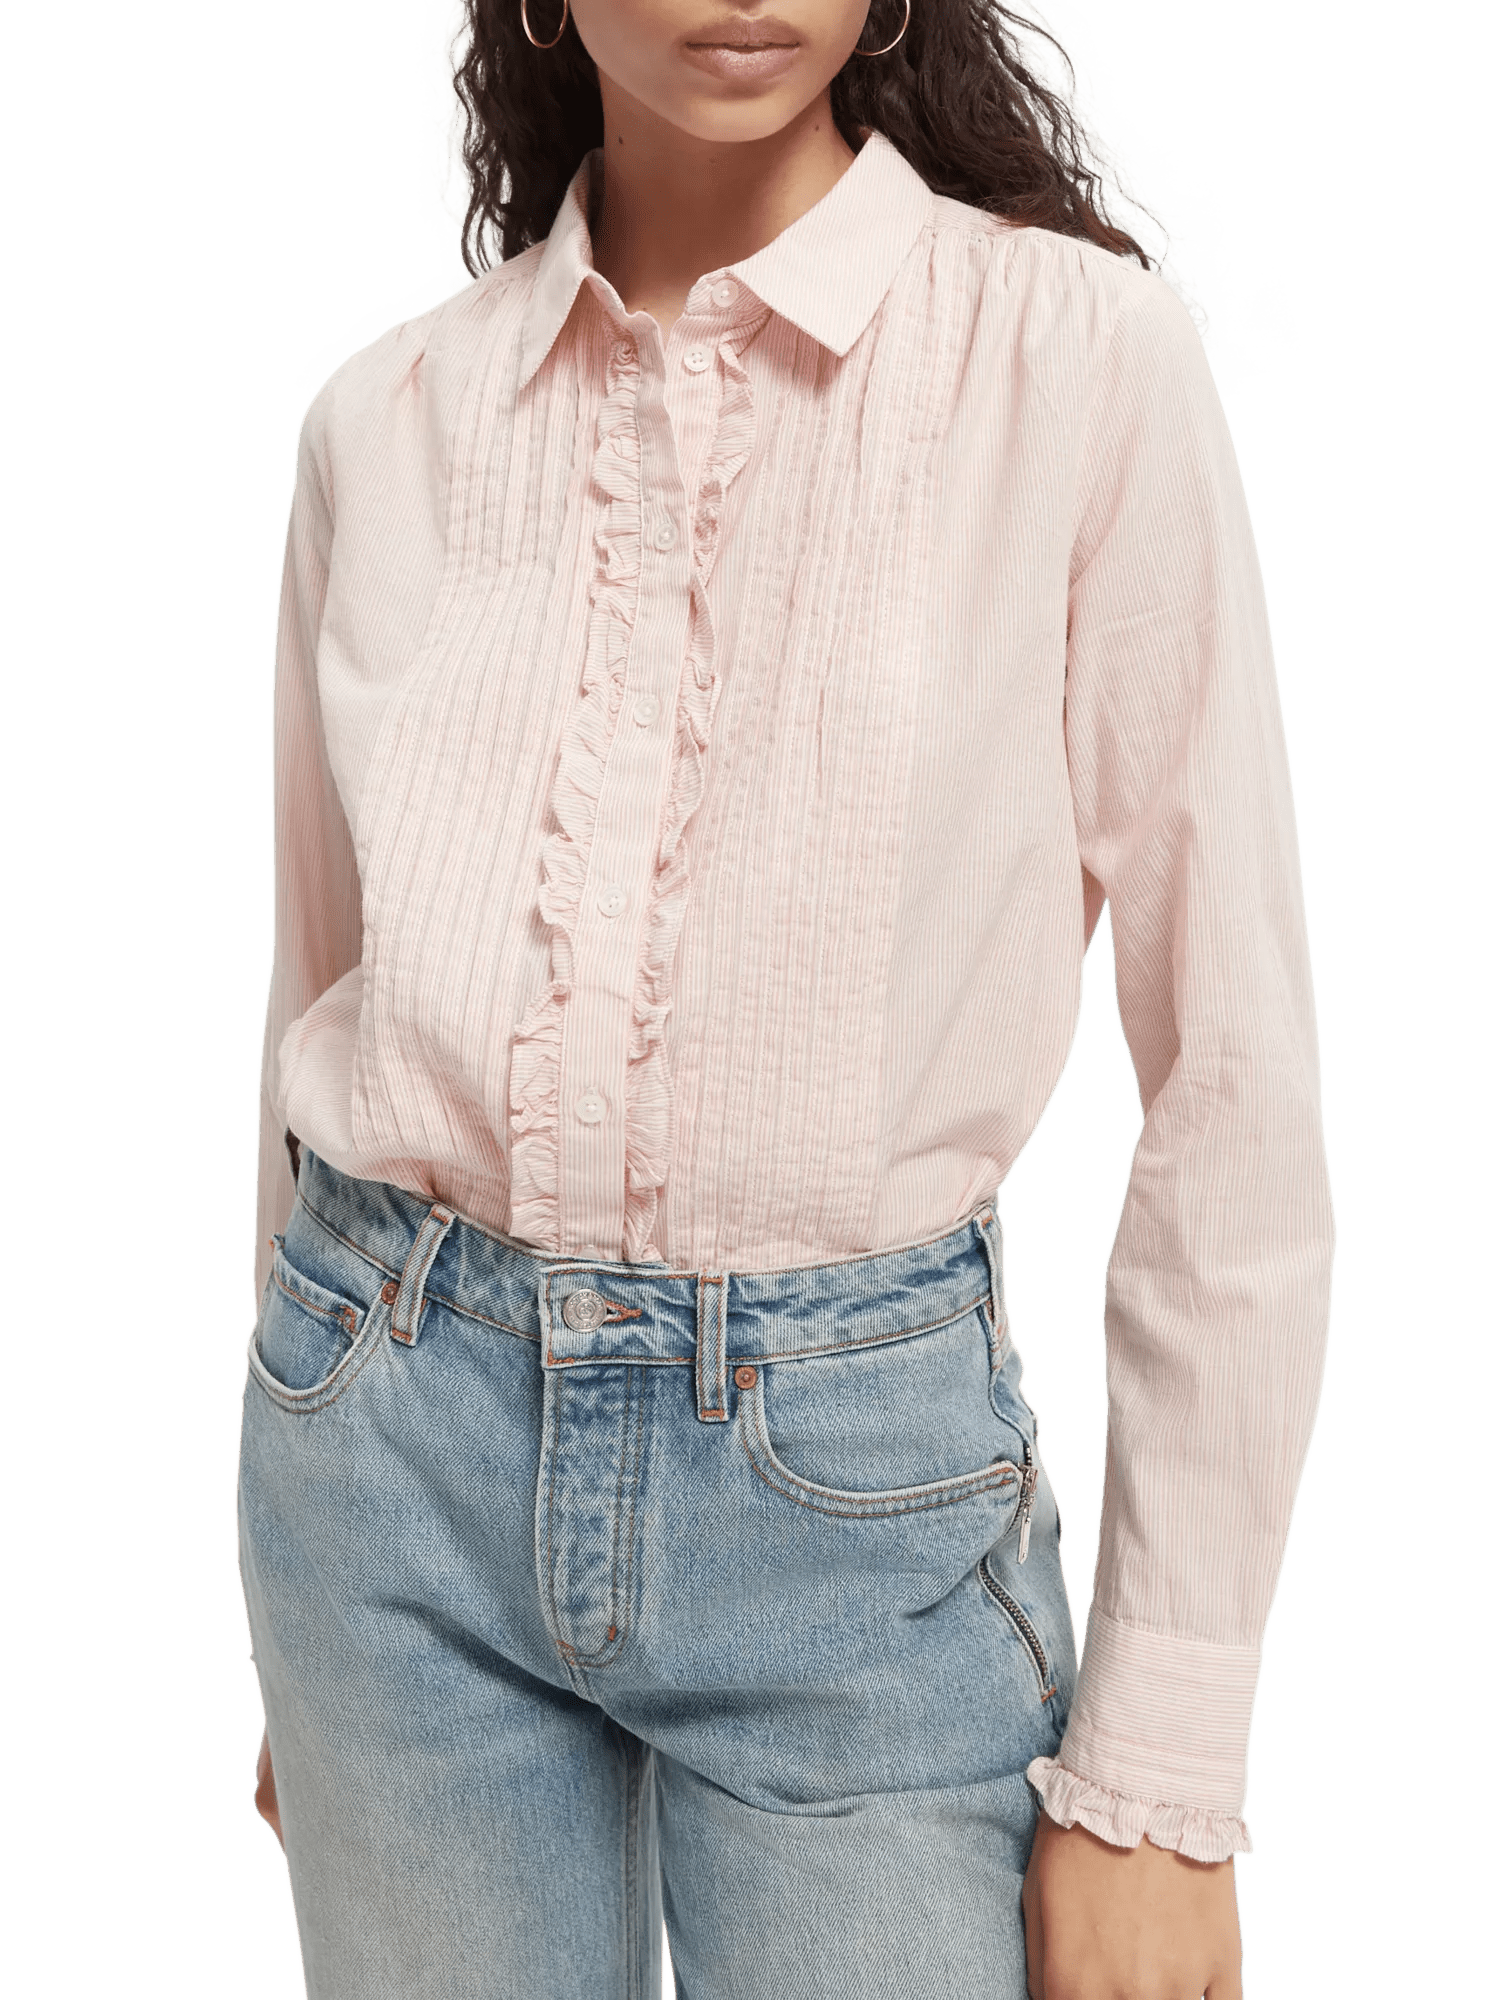 Lightweight organic cotton ruffled shirt